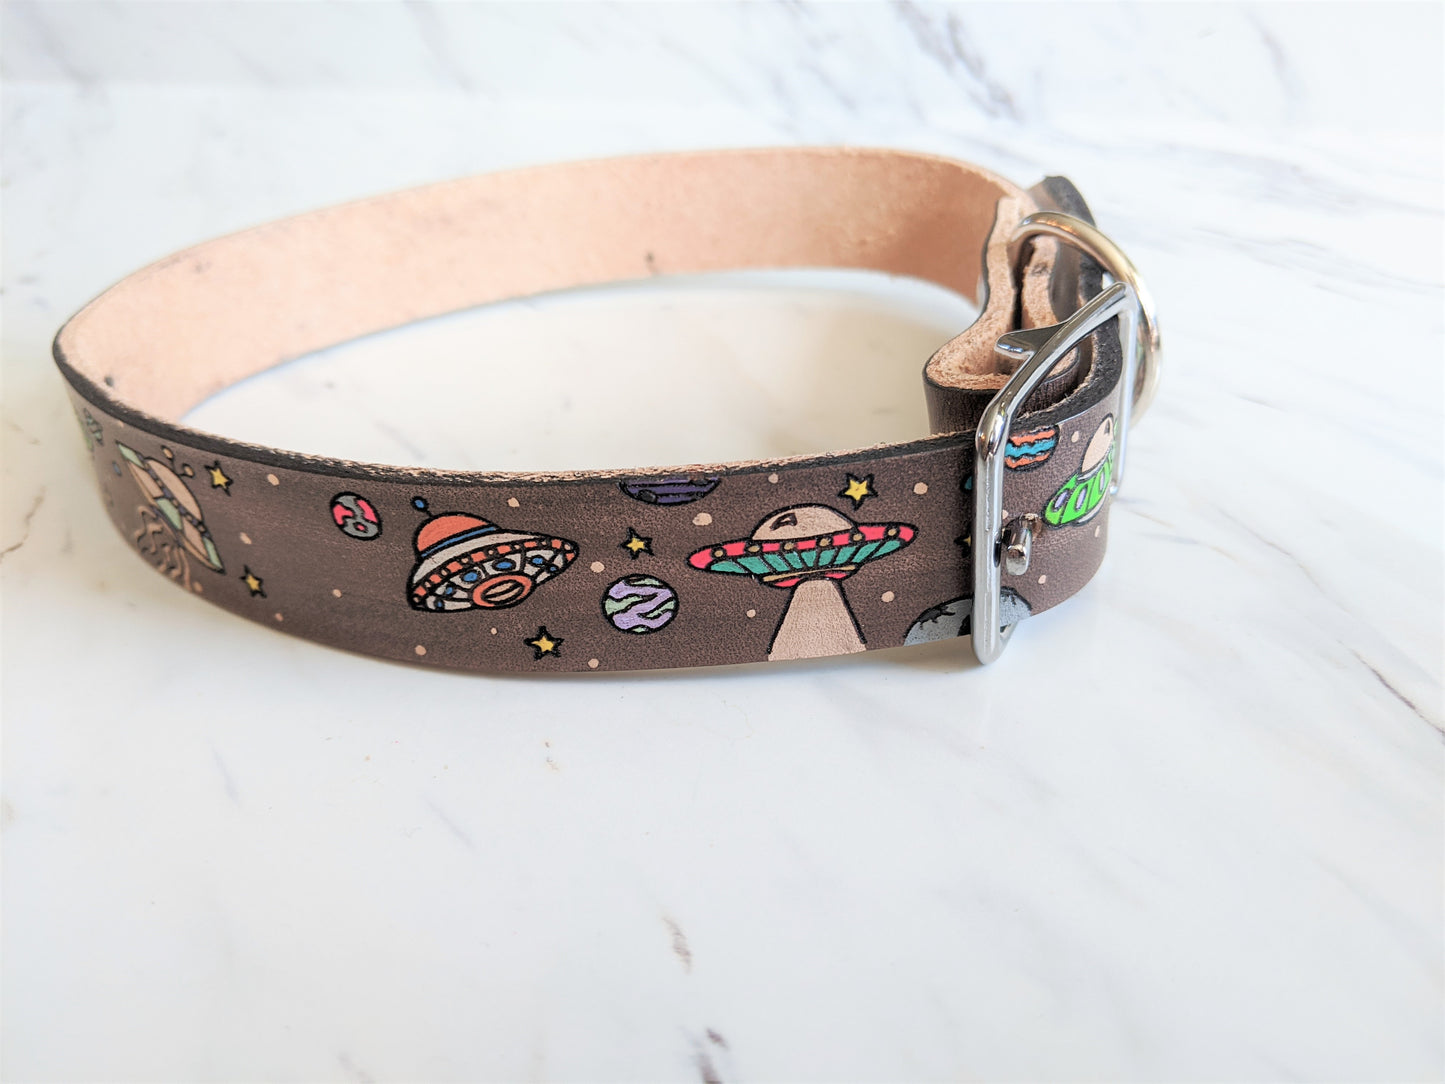 UFO Alien Spaceships - Leather Dog Collar